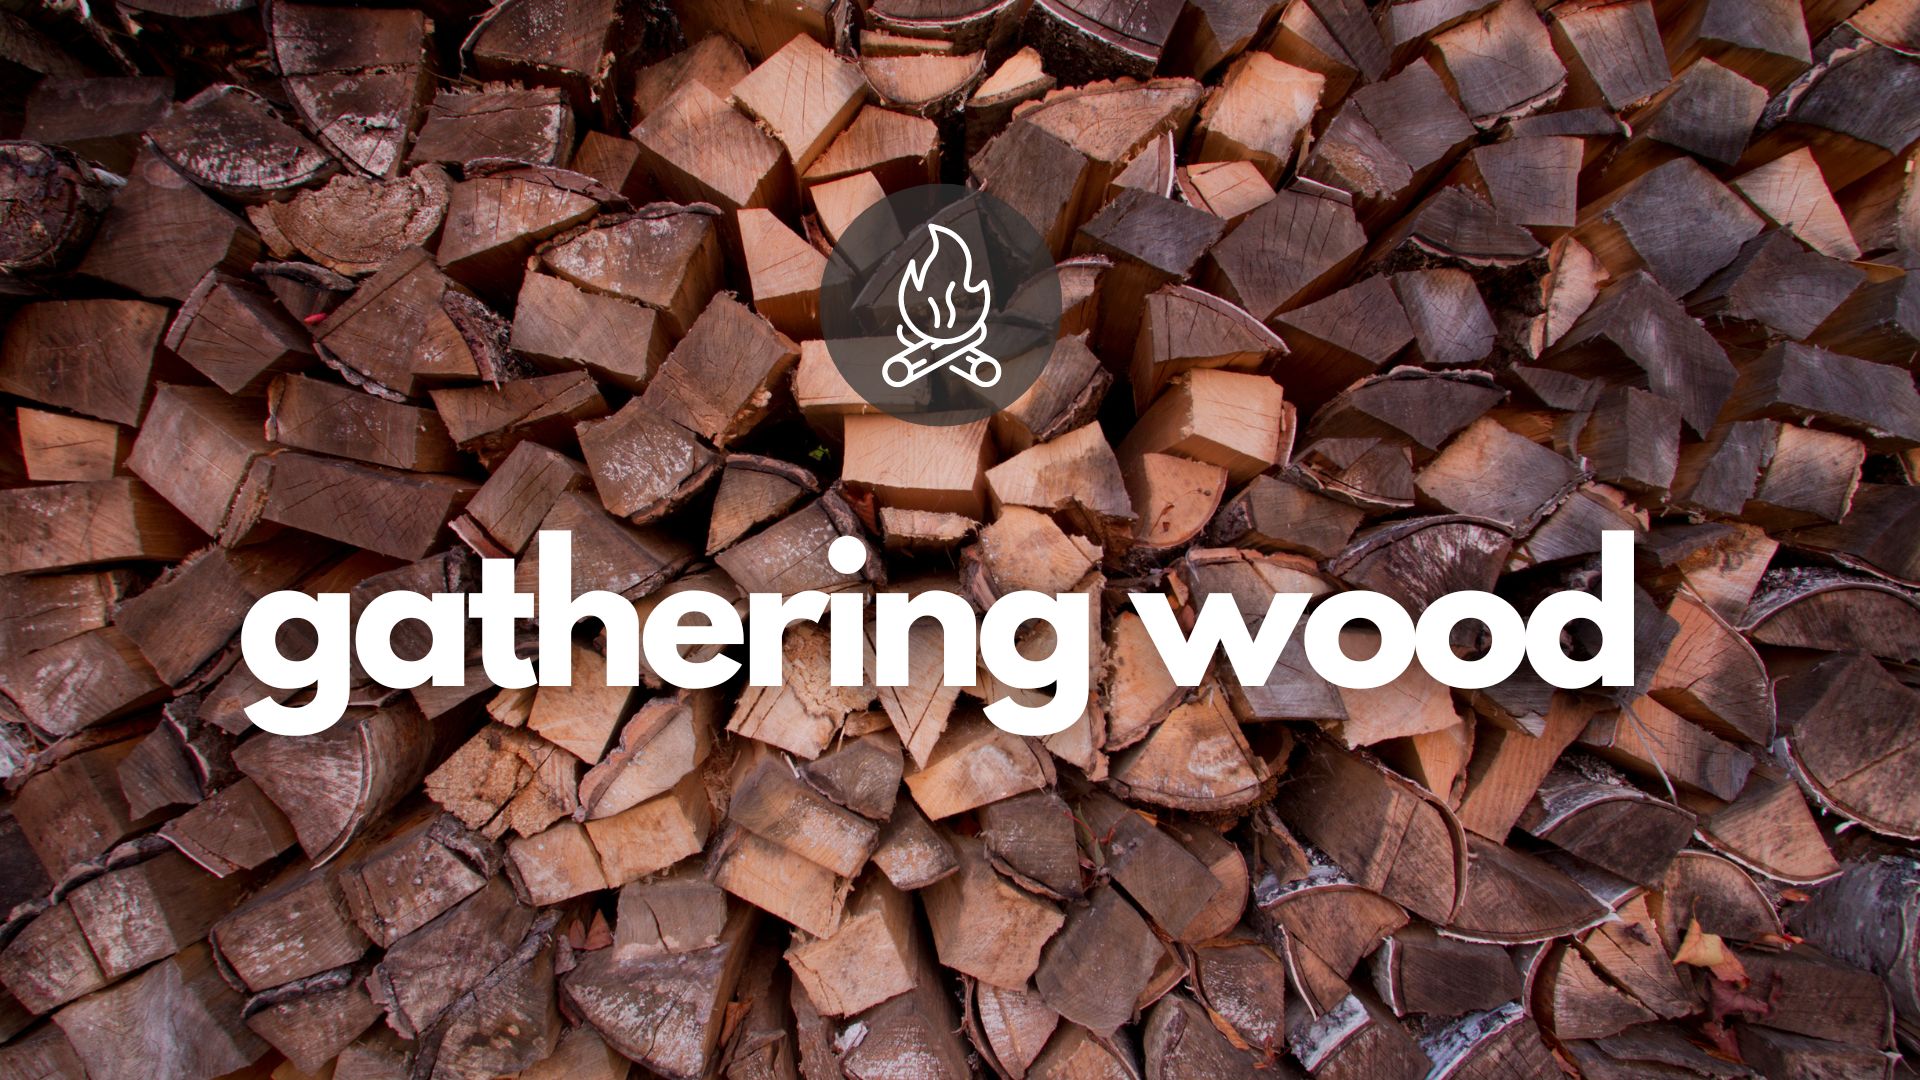 gathering wood-title slide 1920x1080